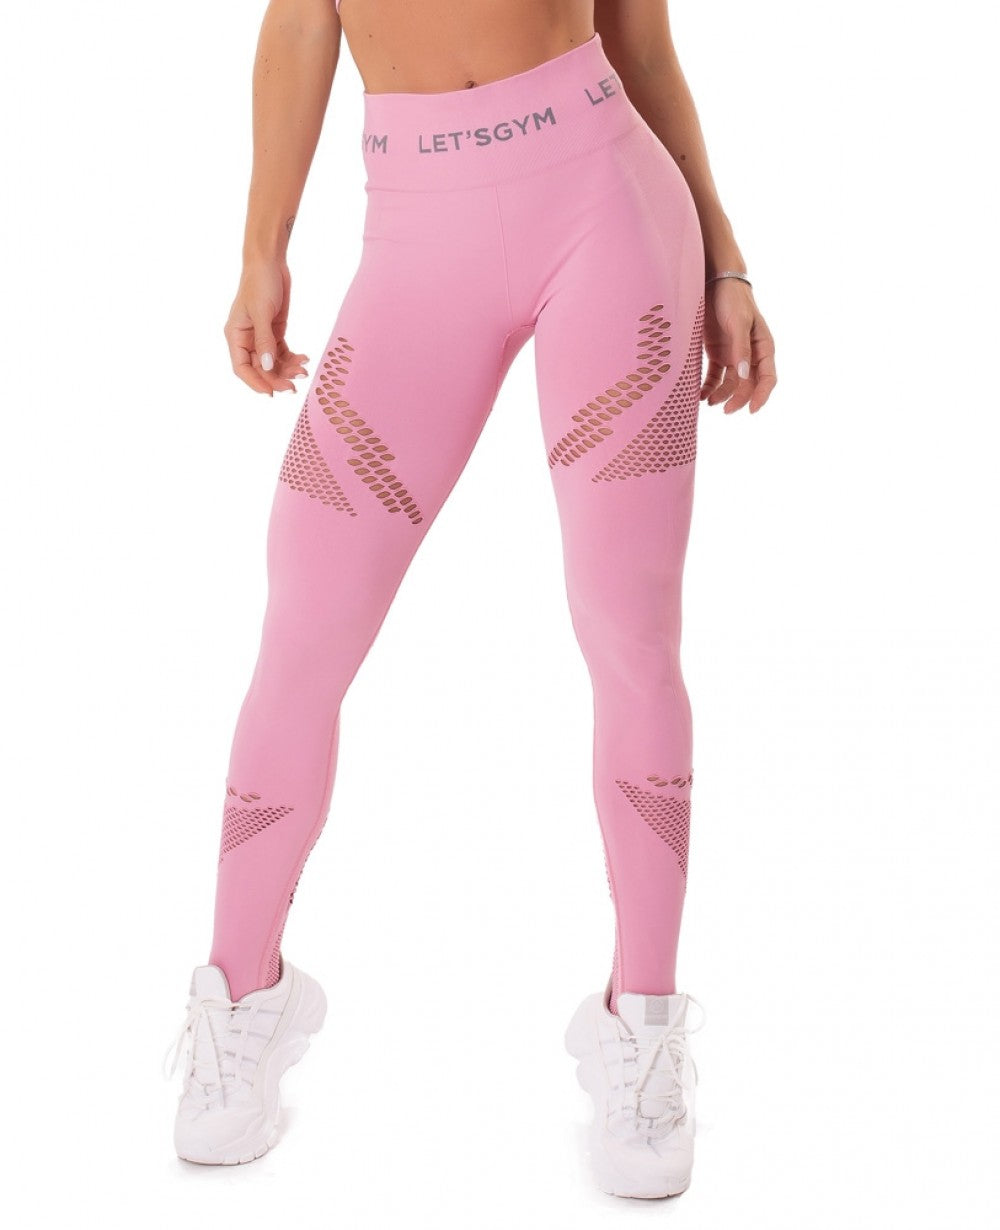 Victoria's Secret Pink Spandex Leggings for Women for sale